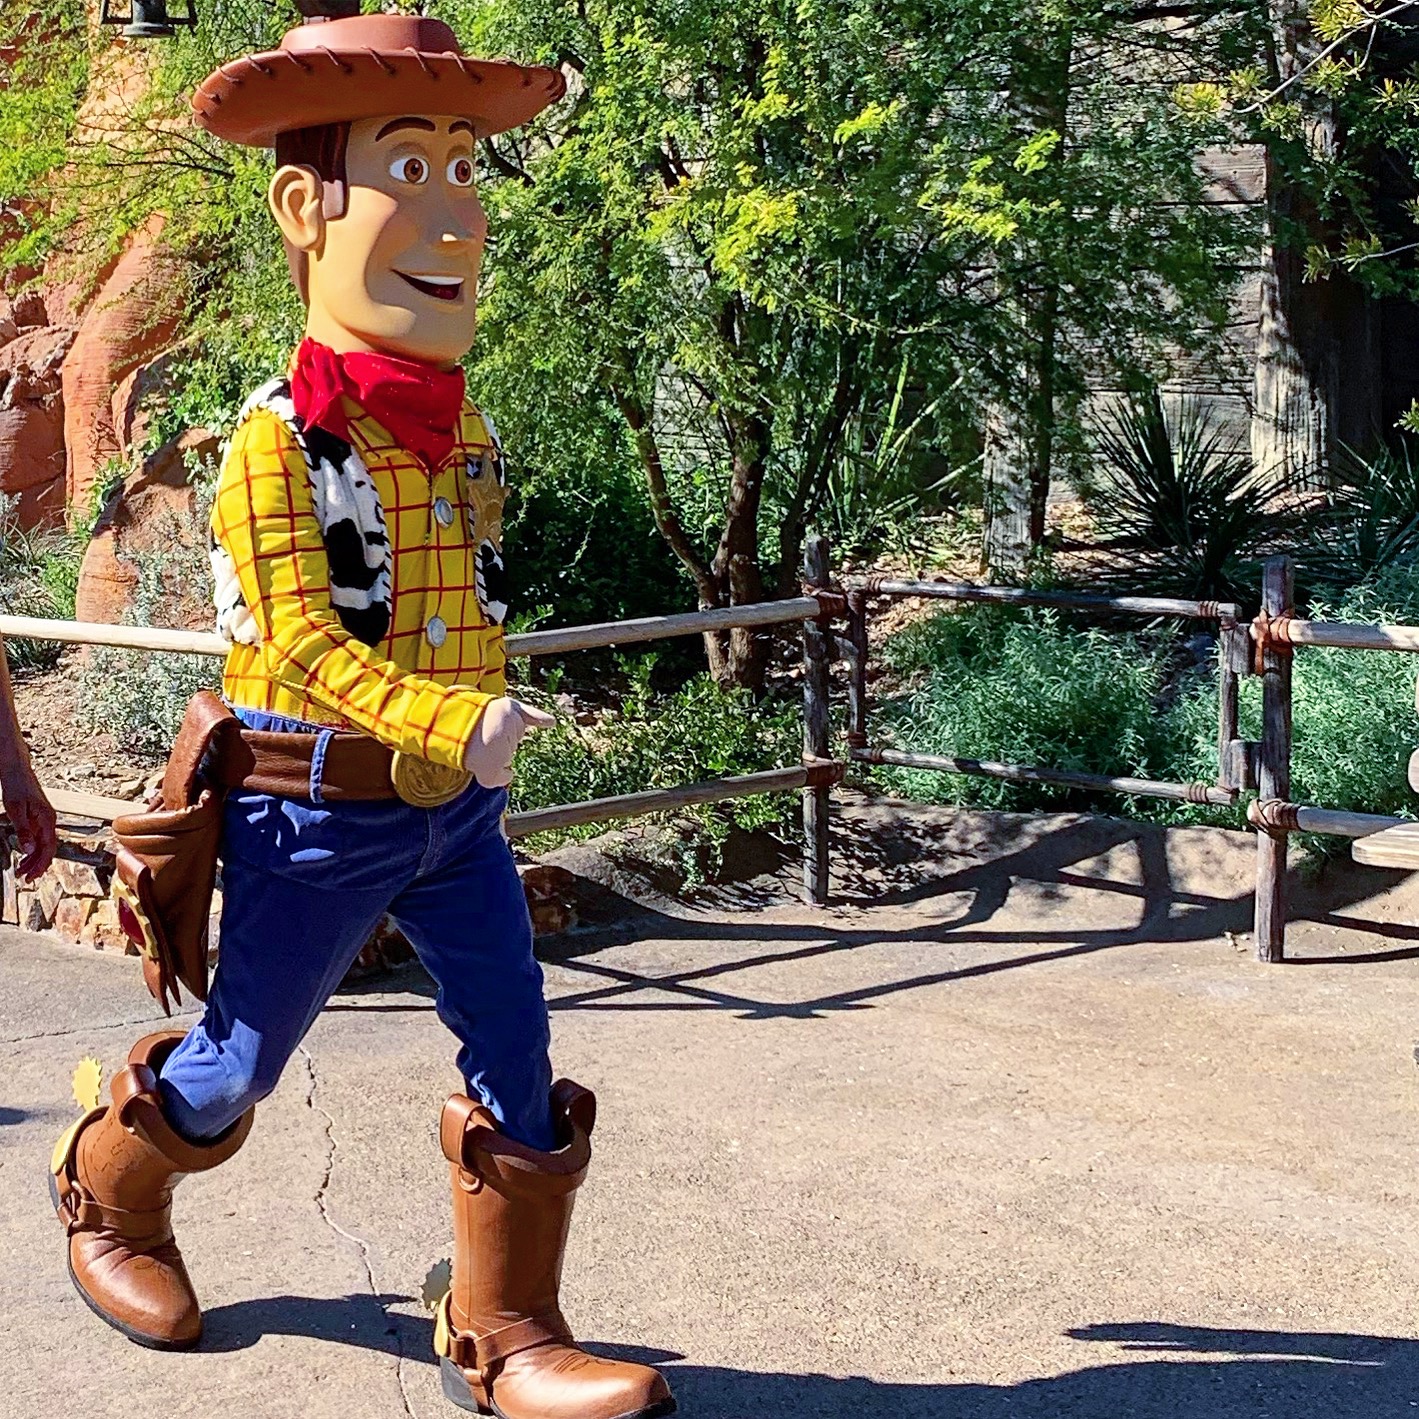 Woody walking on the streets of Disneyland Anaheim California